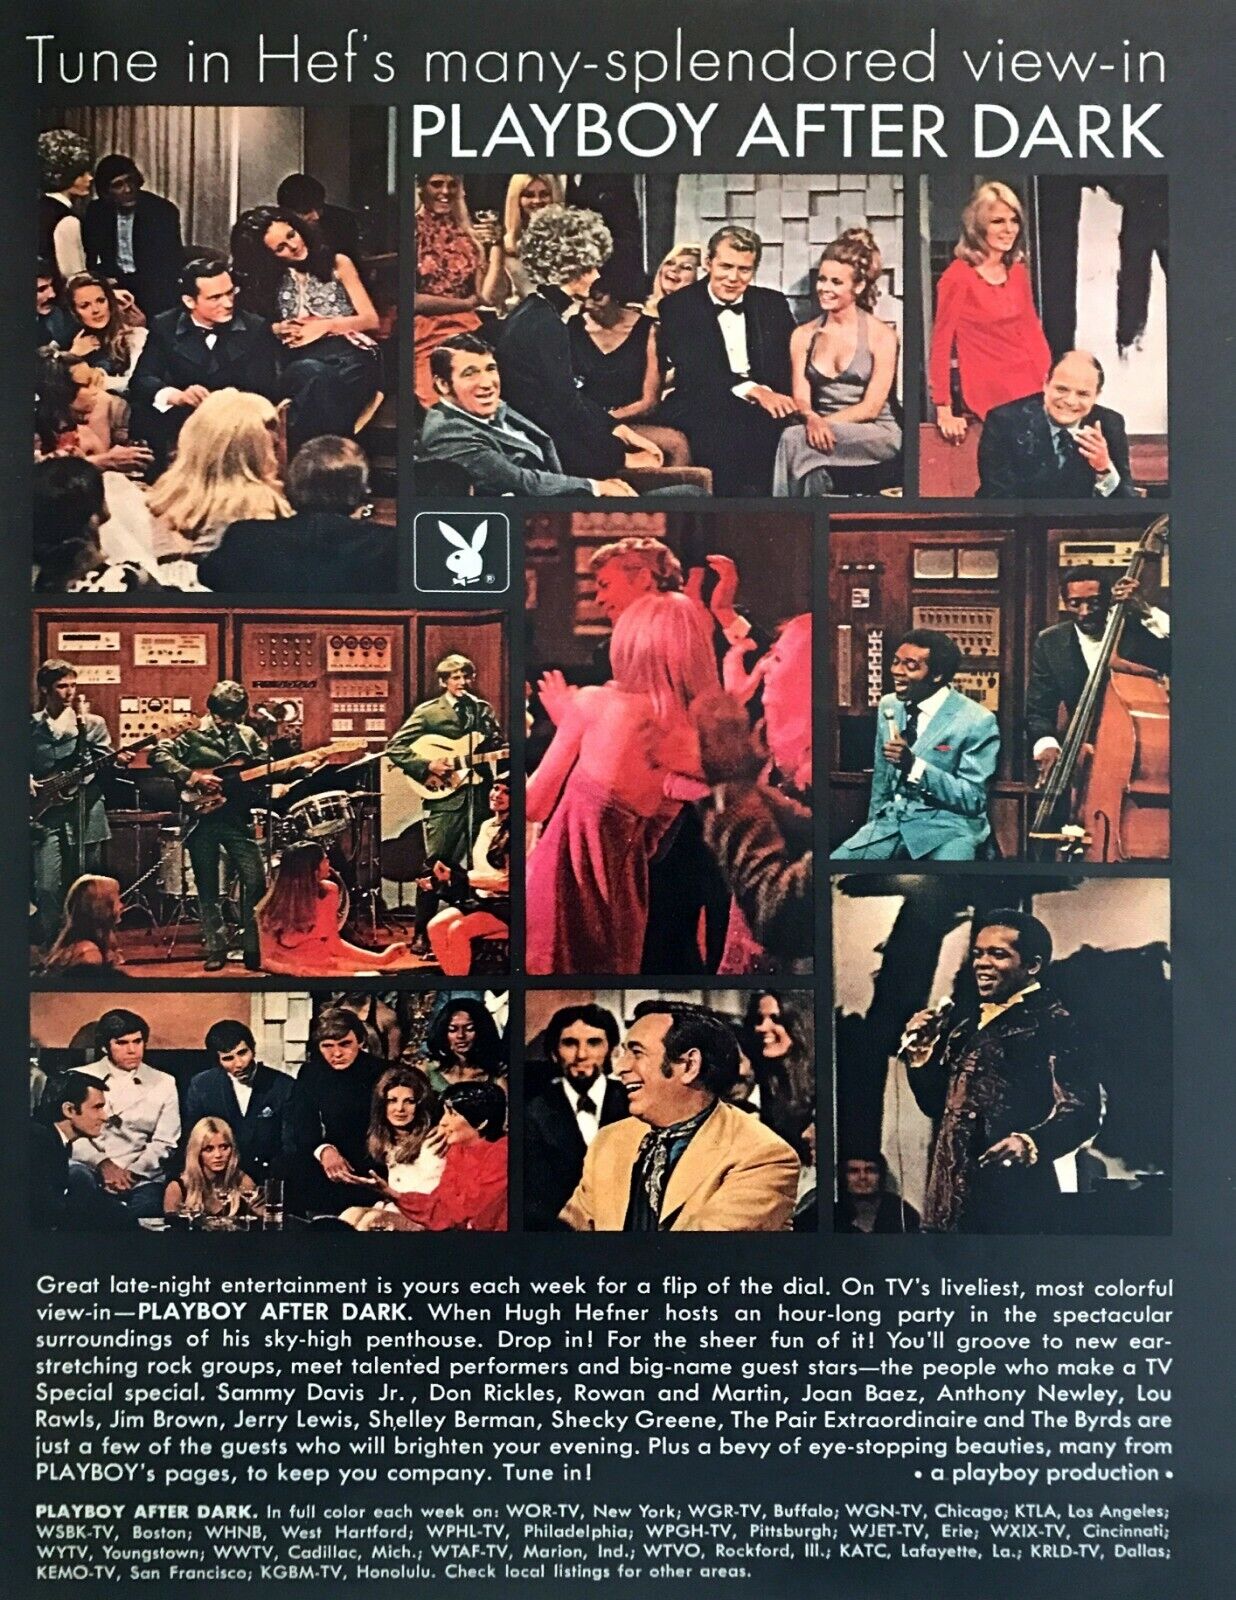 1969 Don Rickles Lou Rawls Hugh Hefner Photo Playboy After Dark Vintage Print Ad